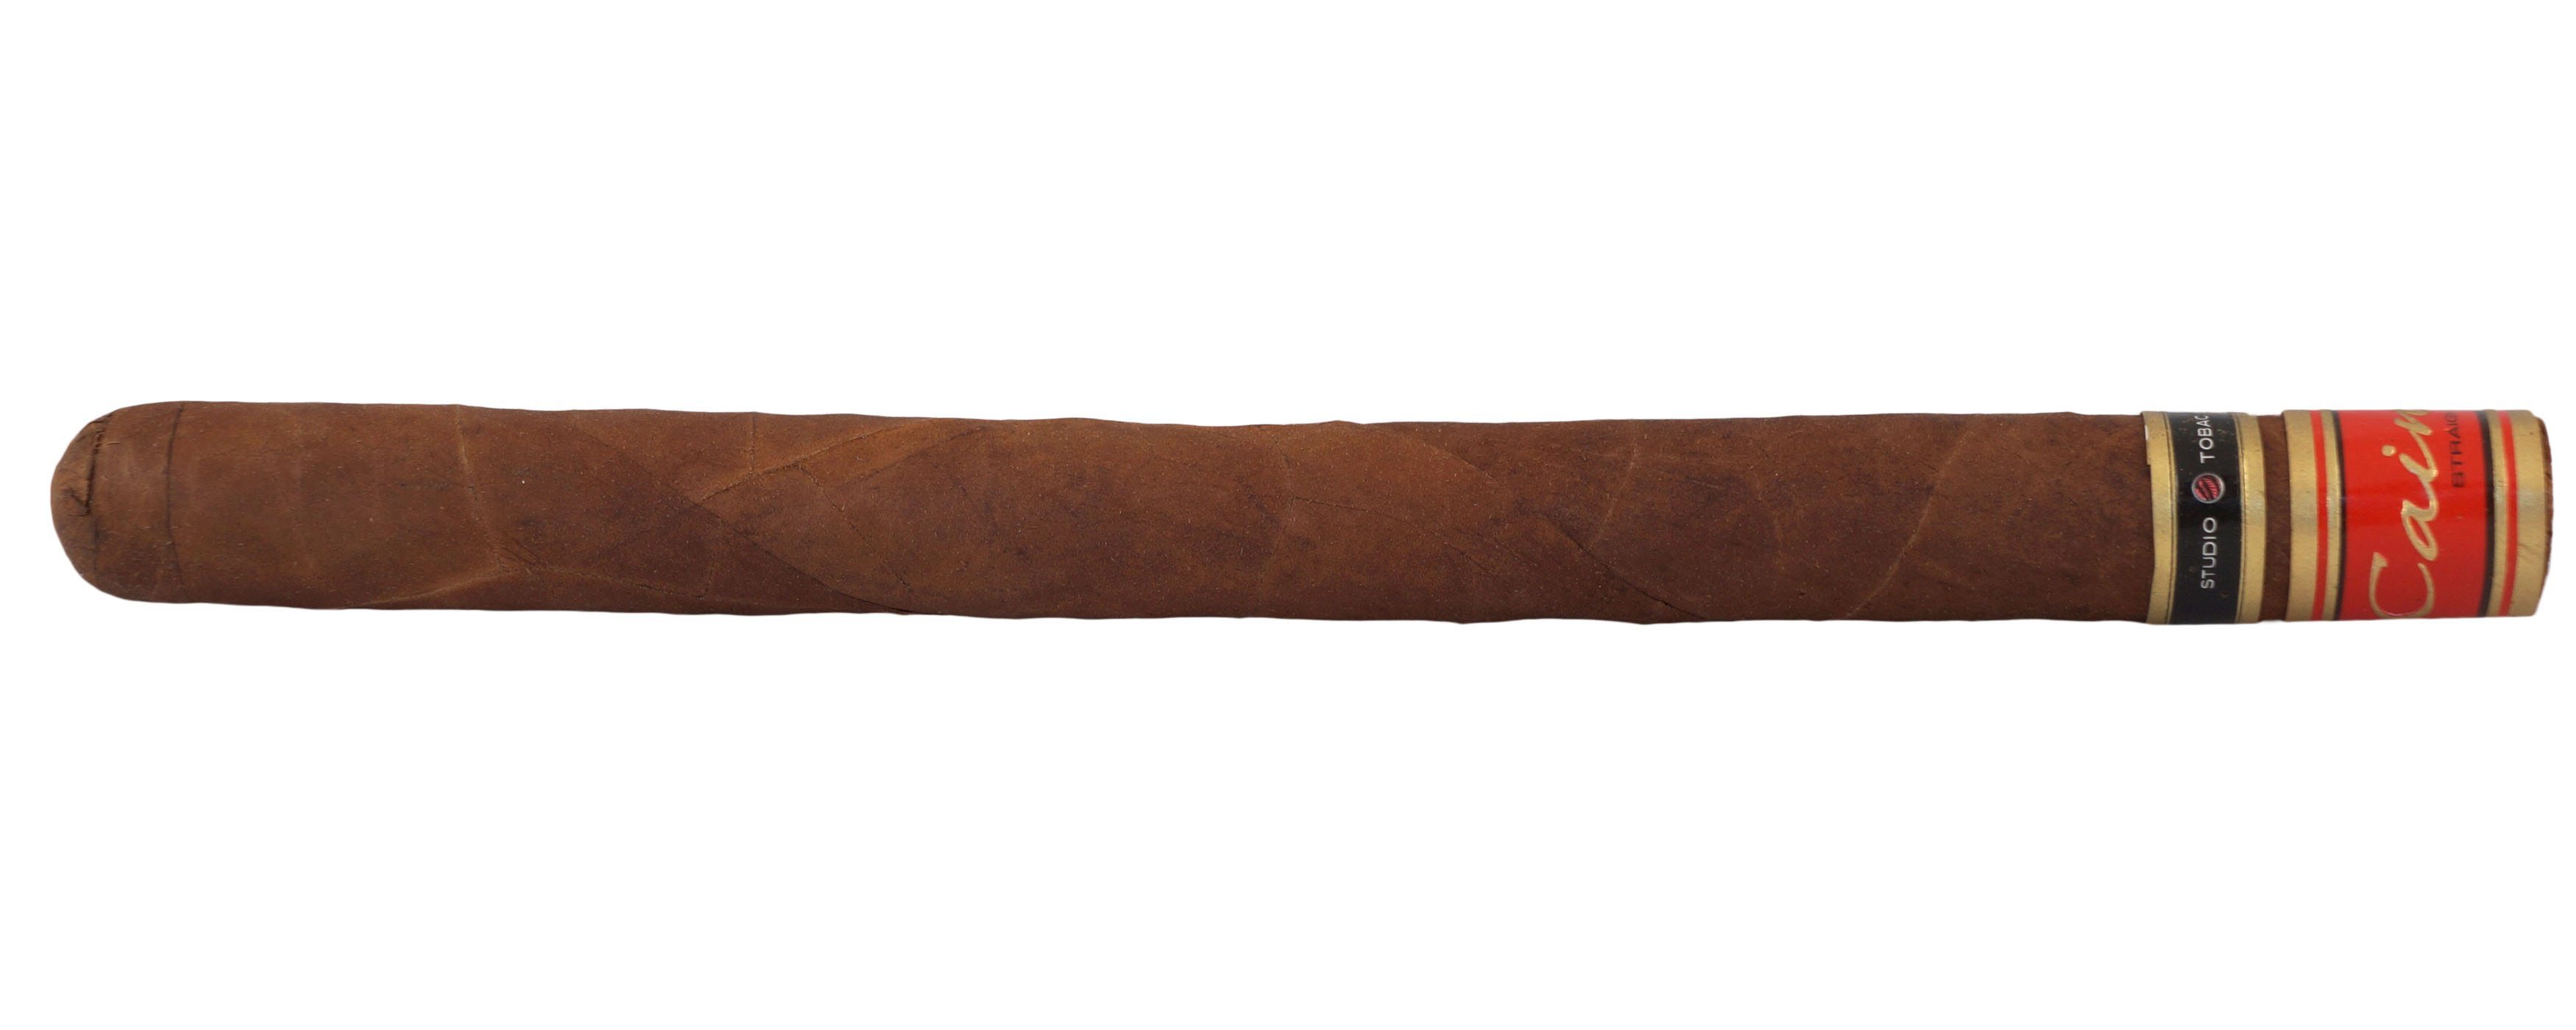 Blind Cigar Review: Cain | F Lancero